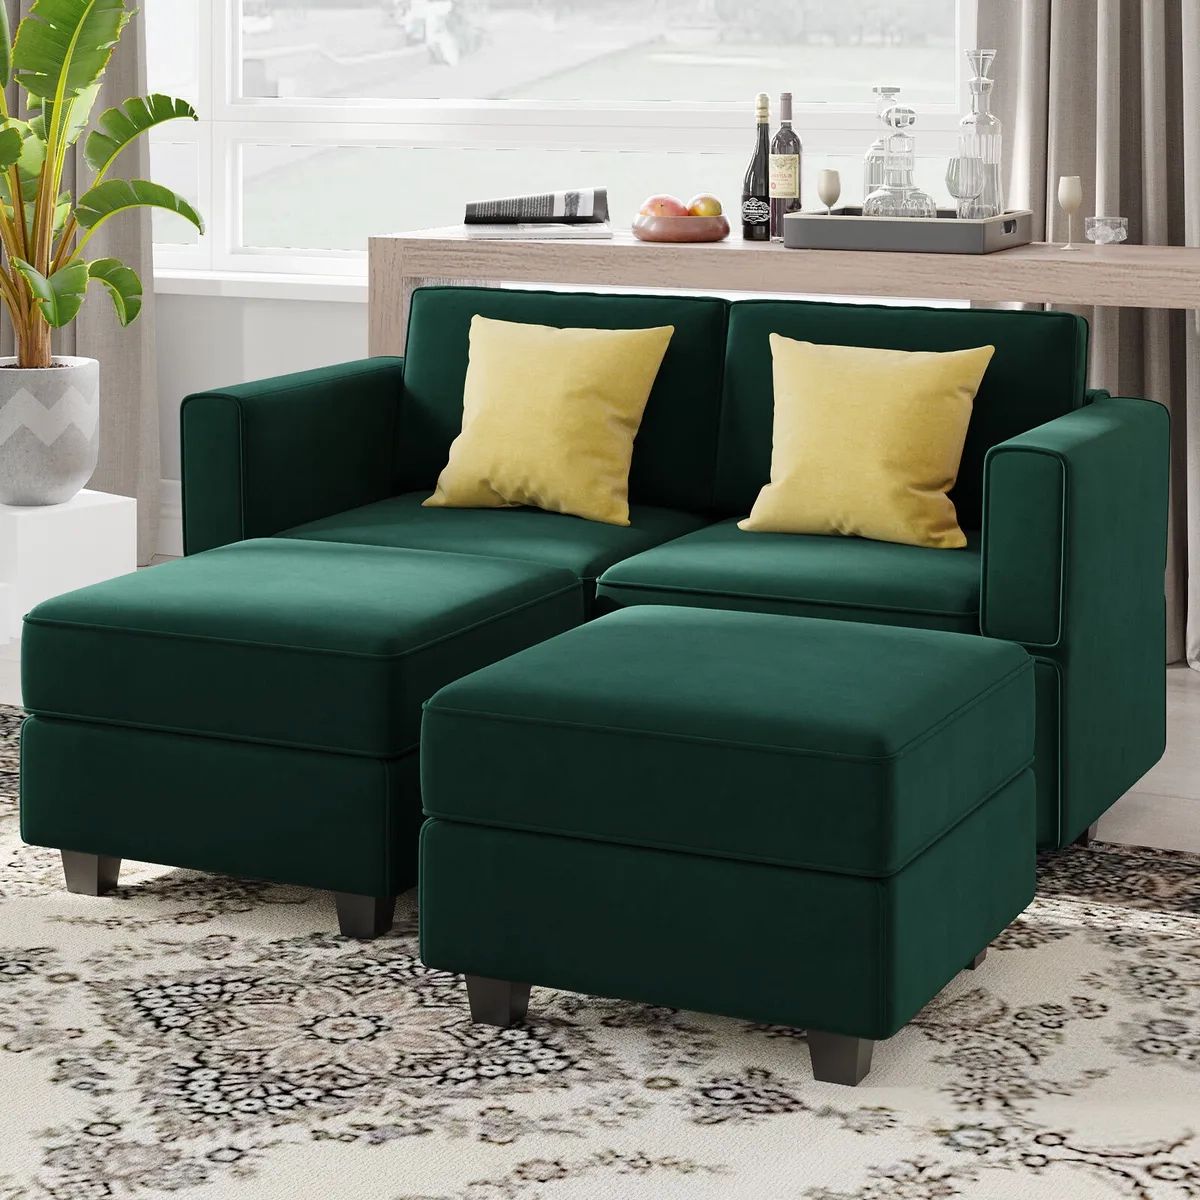 Belffin Modular Sectional Sofa With Storage Oversized Couch Bed Velvet Green  | Ebay In Green Velvet Modular Sectionals (Photo 10 of 15)